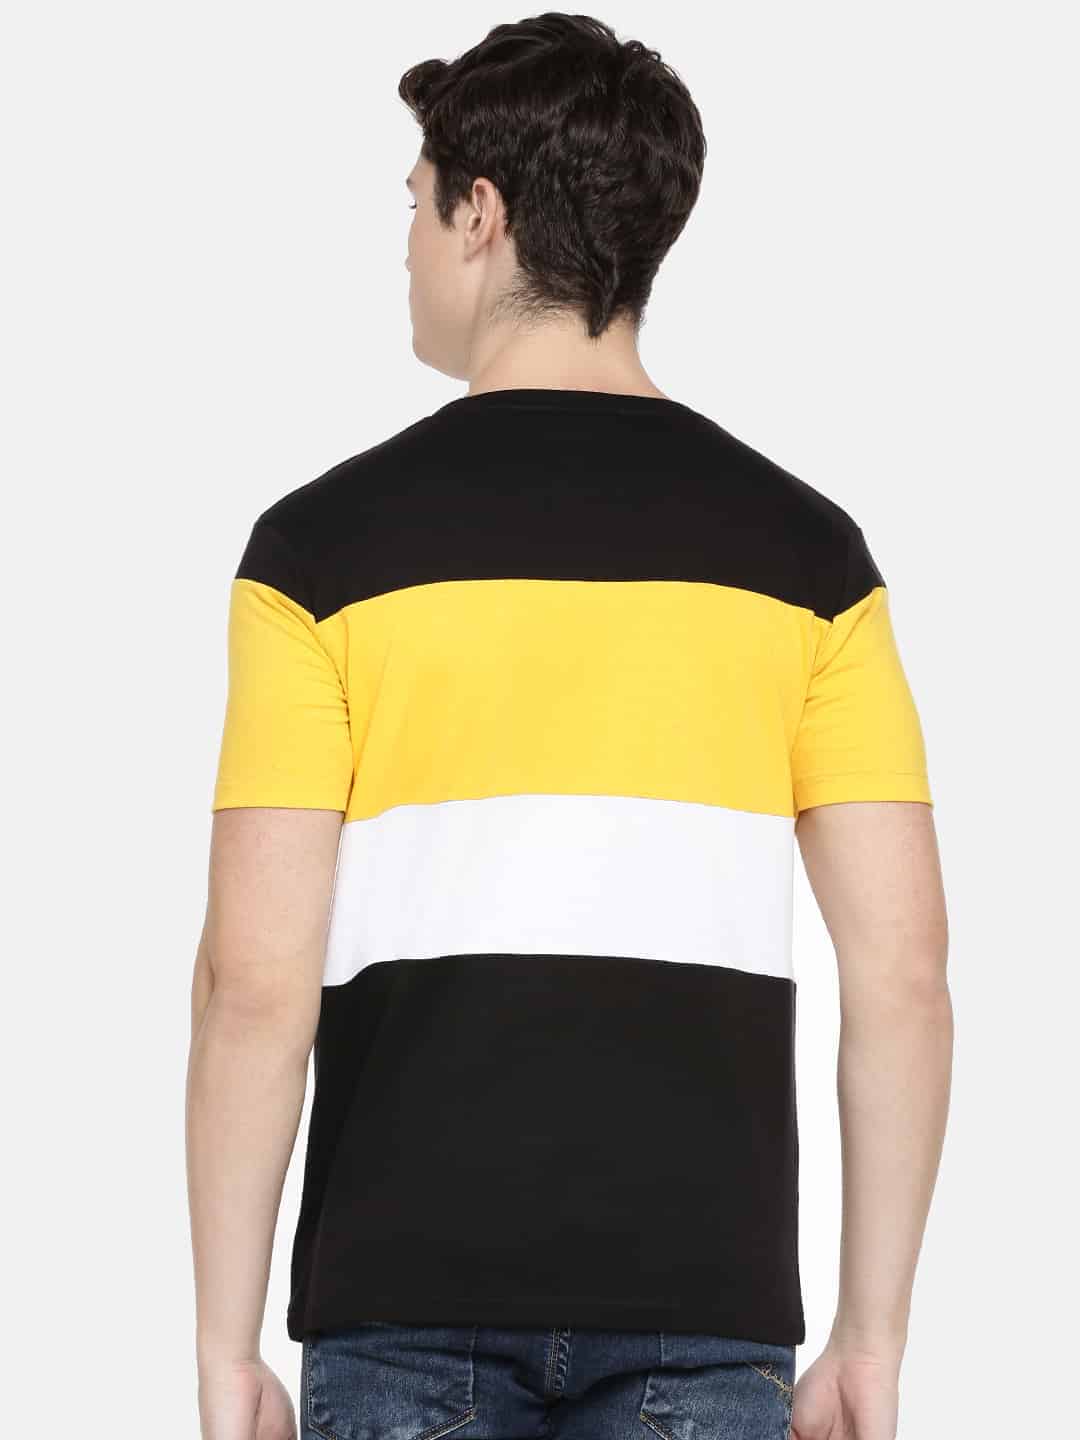 Men Black and Yellow Colourblocked Casual T-Shirt-RFSS19M01